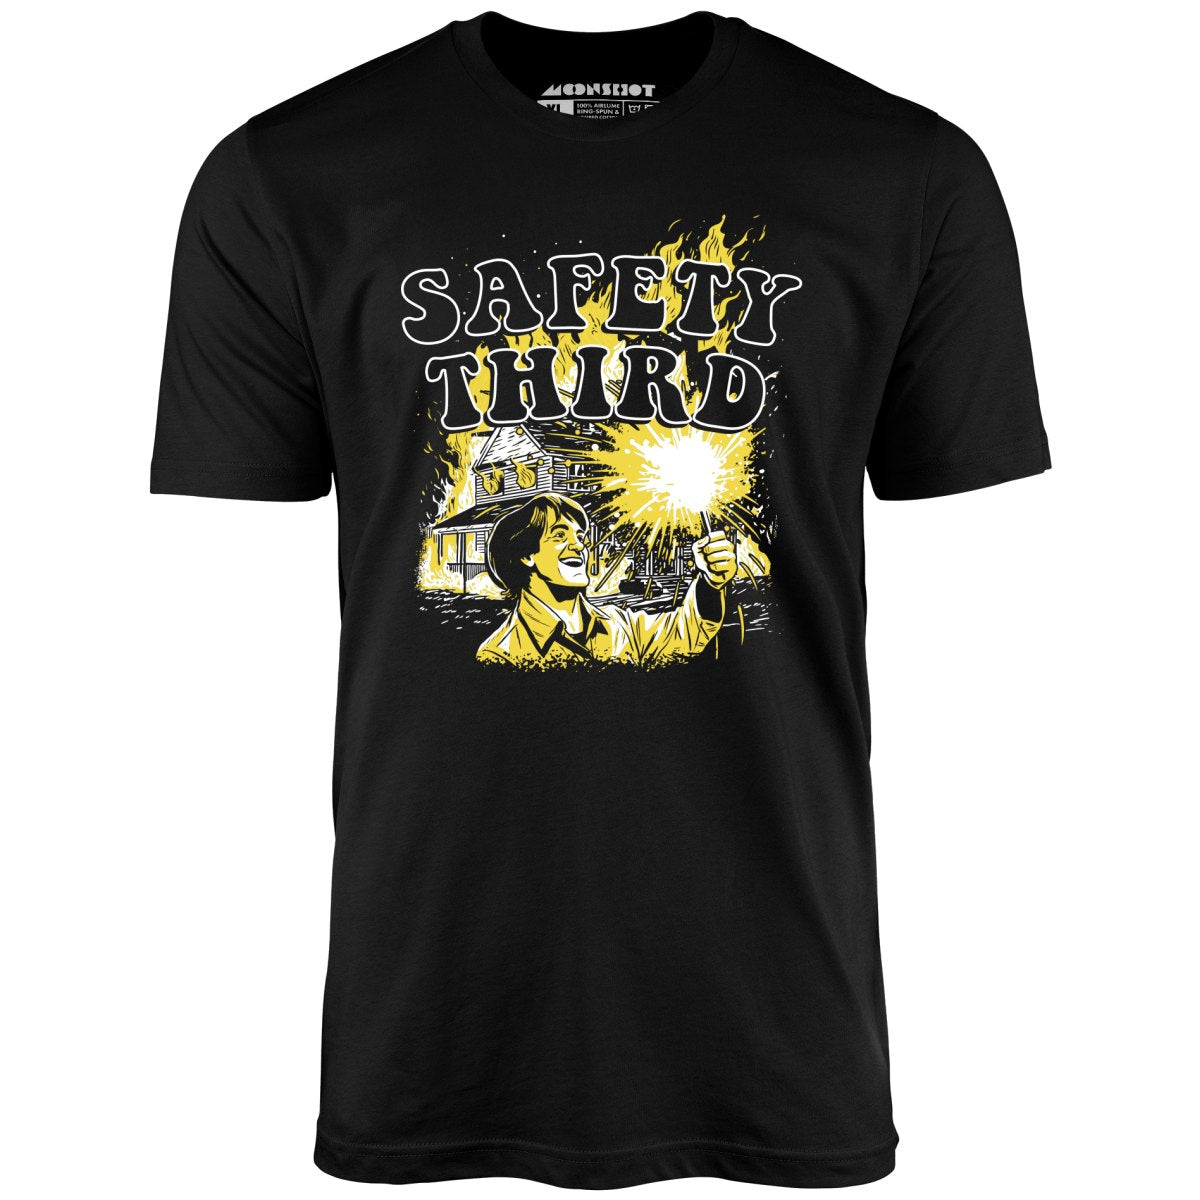 Safety Third Fire - Unisex T-Shirt